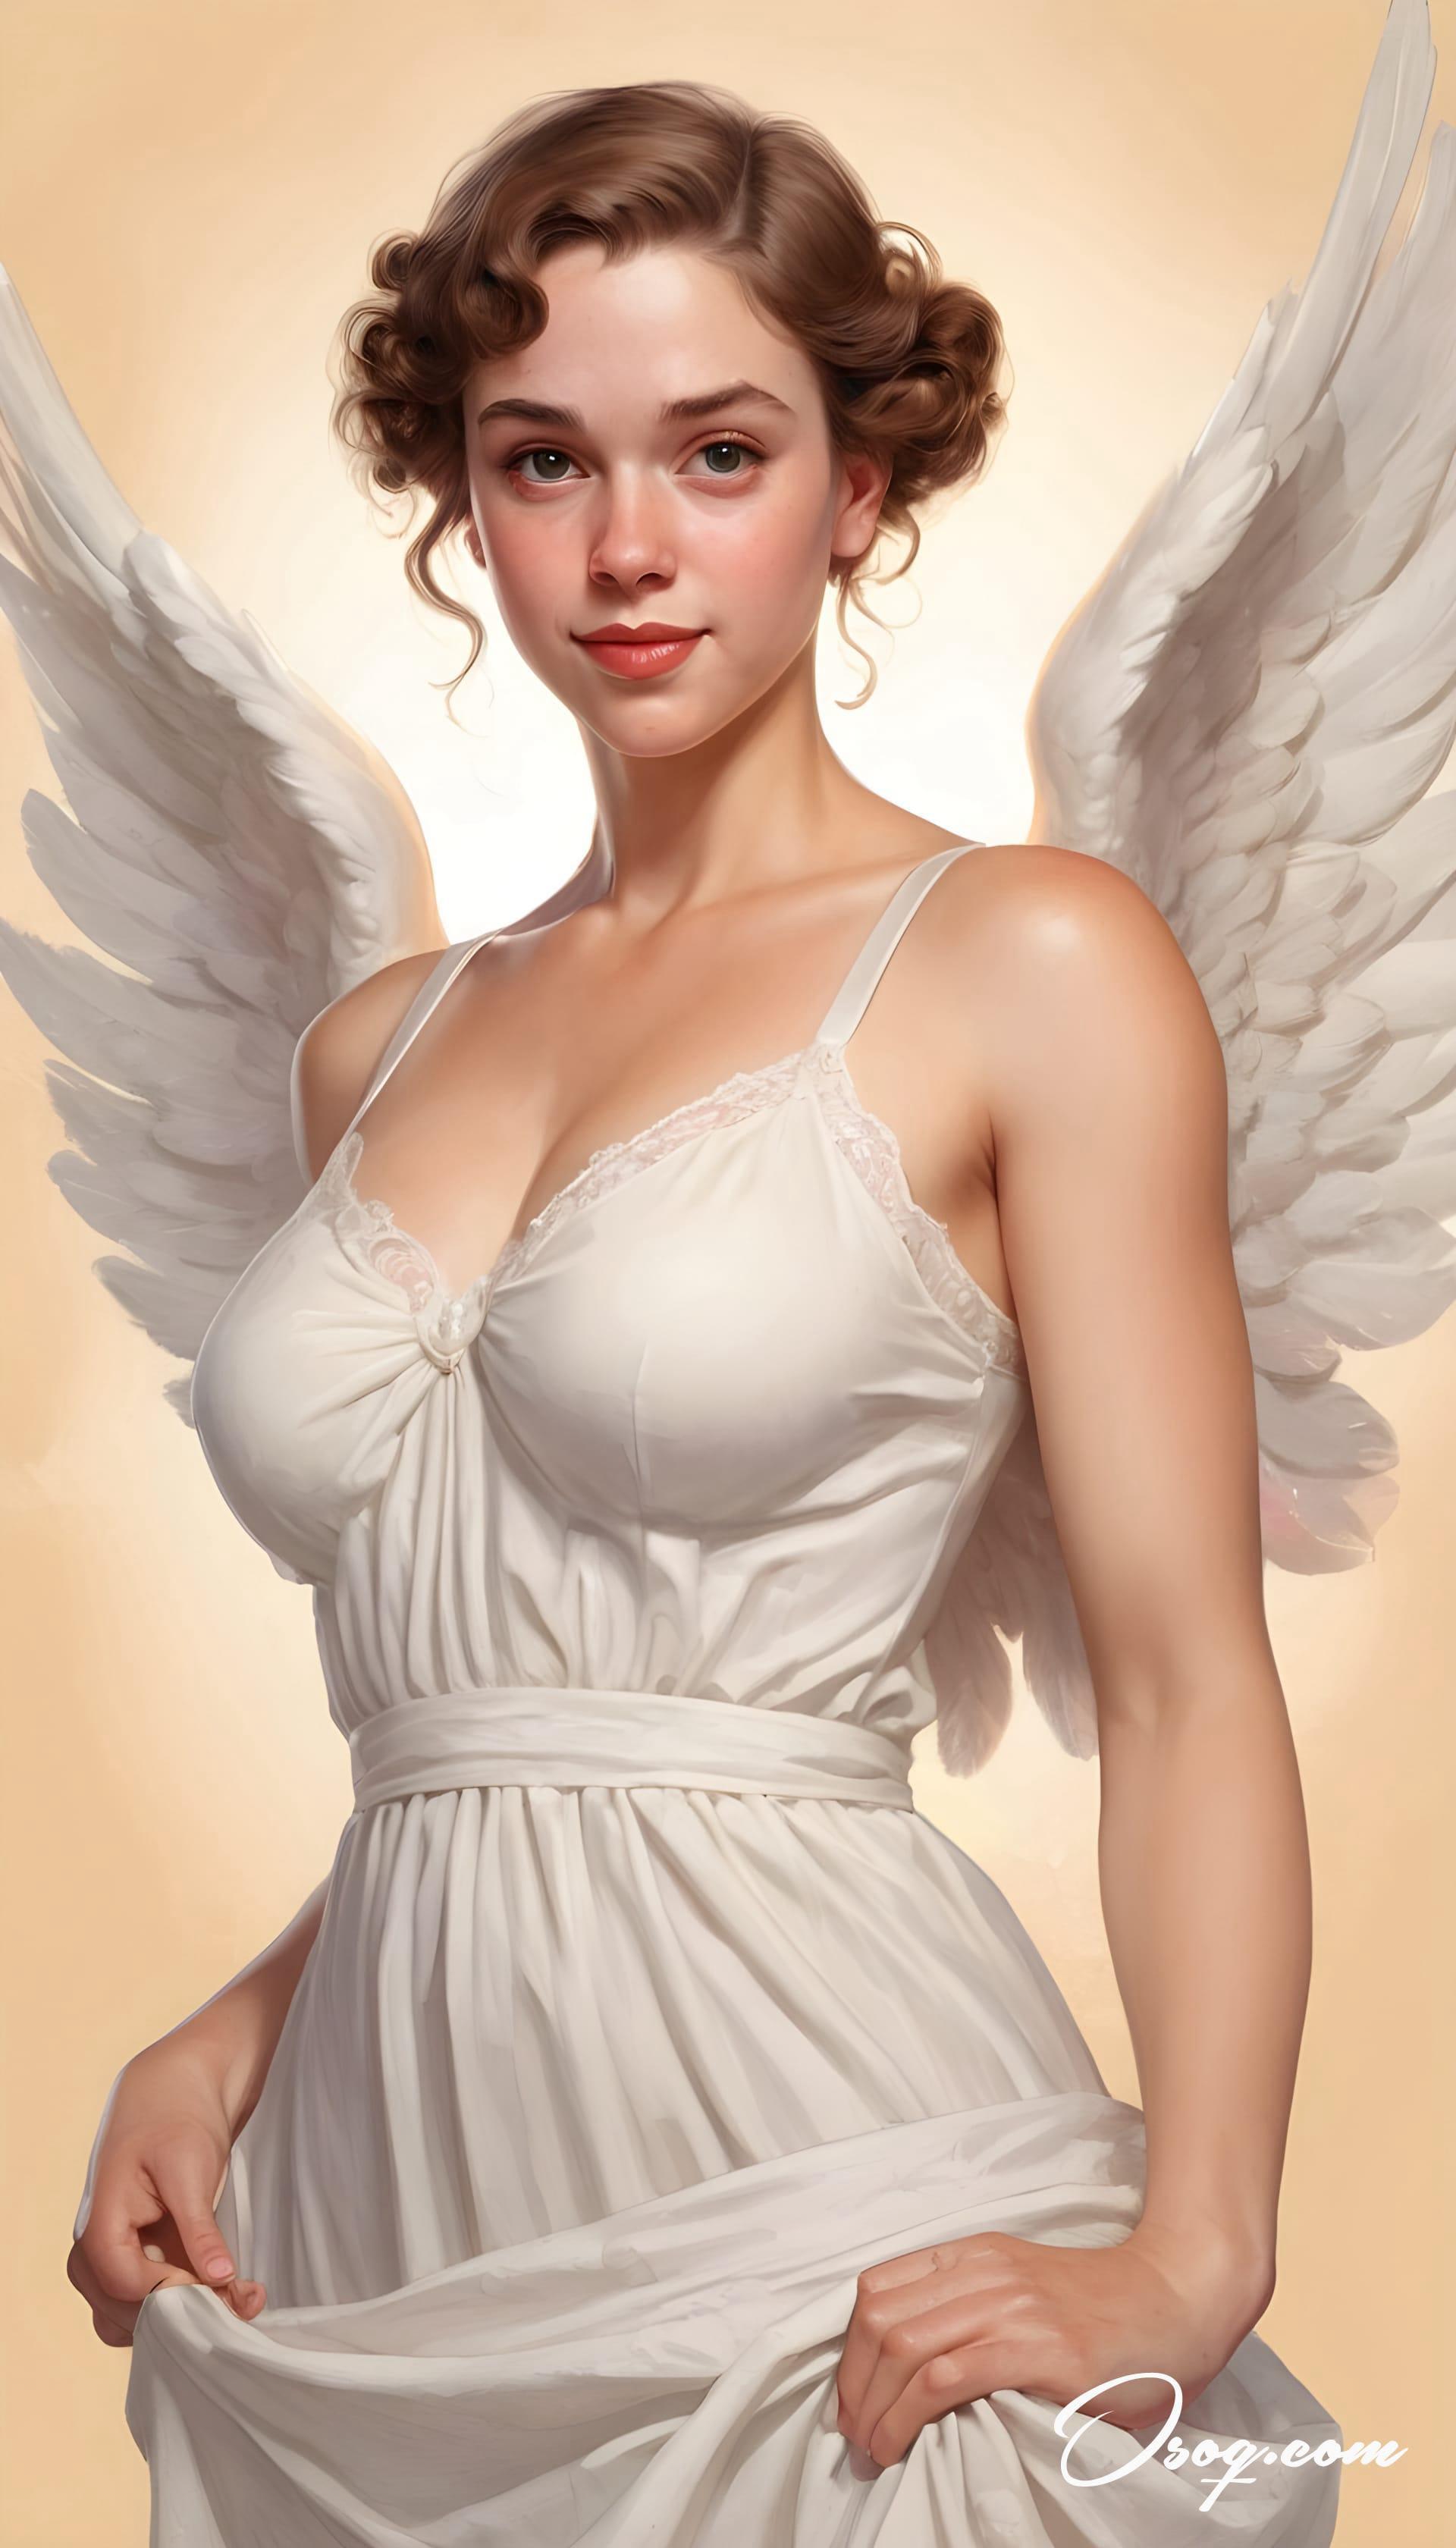 Angel caricature 01